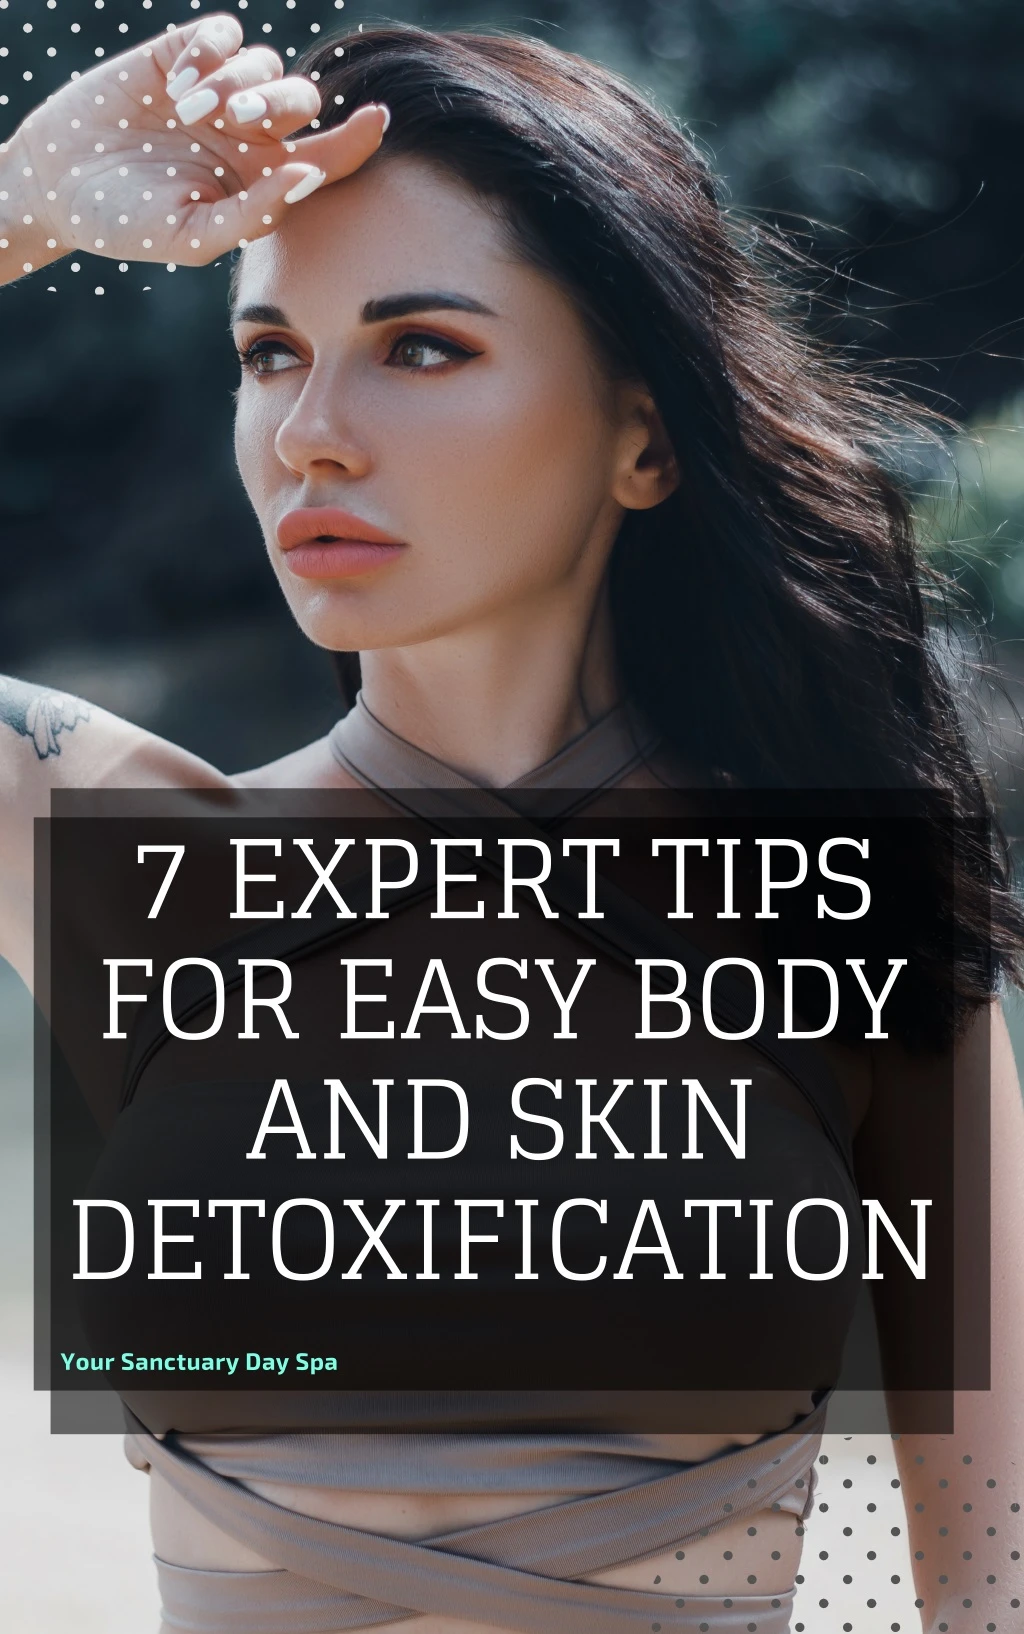 7 expert tips for easy body and skin